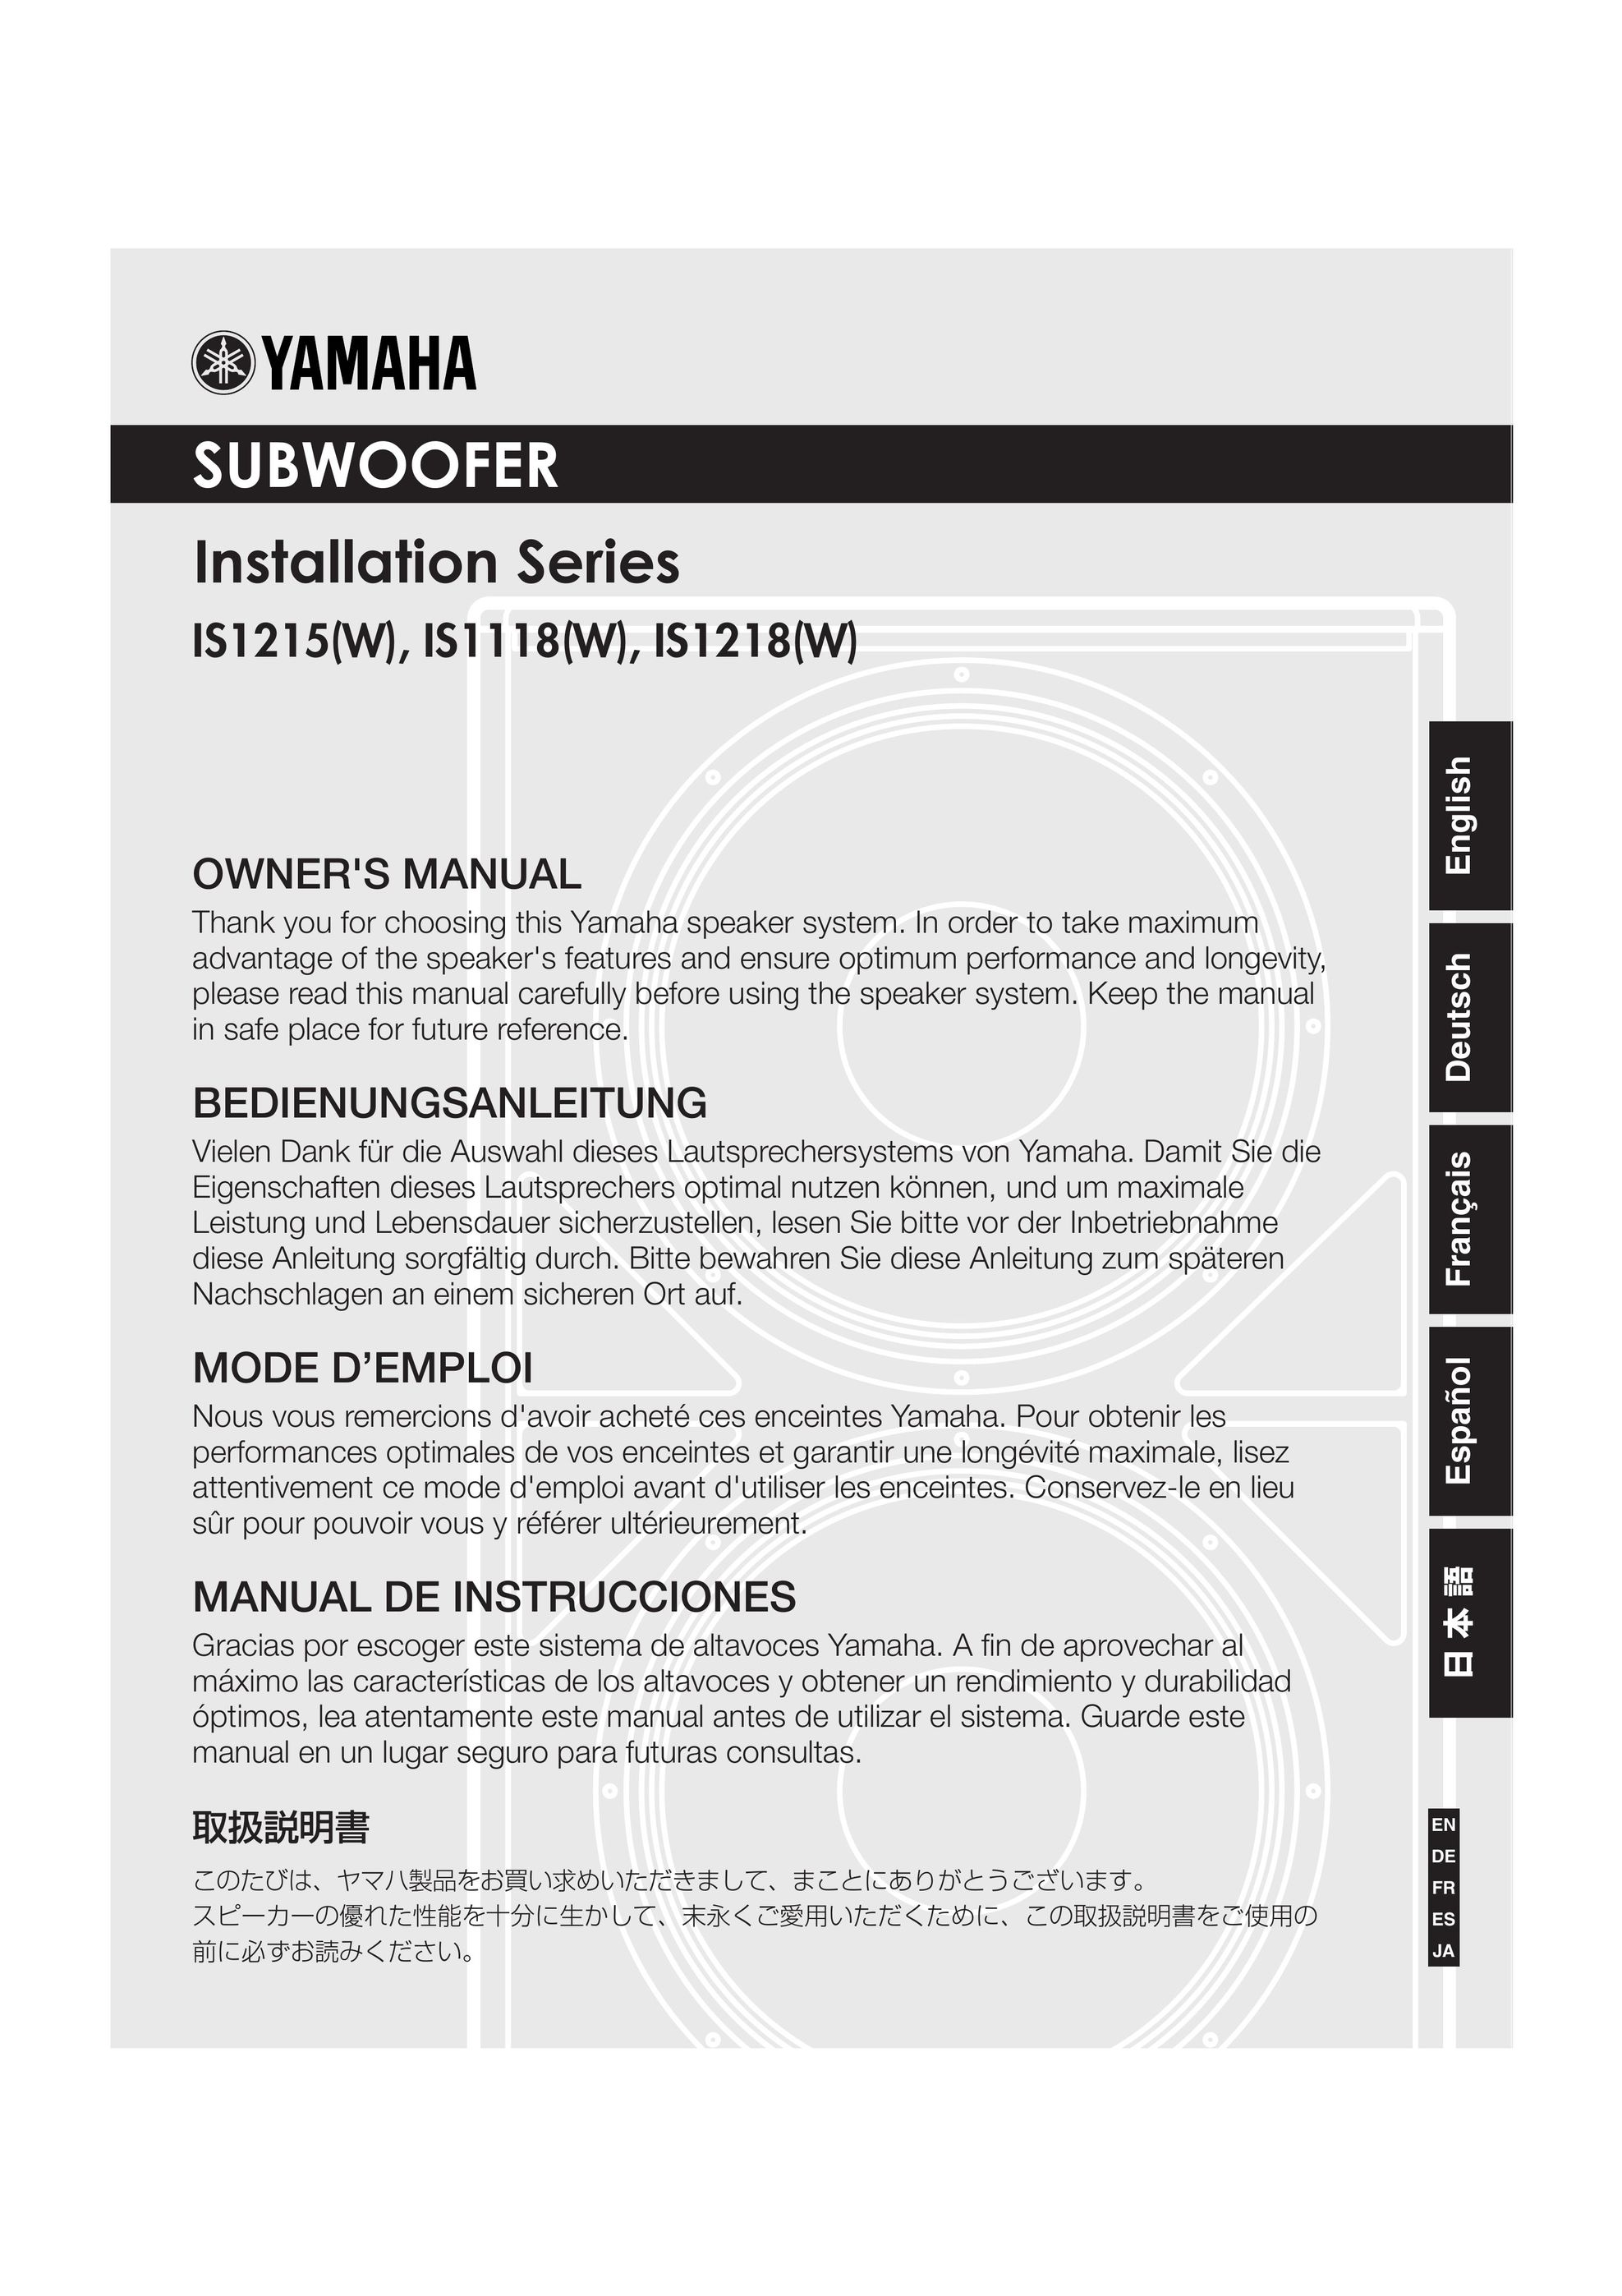 Yamaha IS1118(W) Speaker User Manual